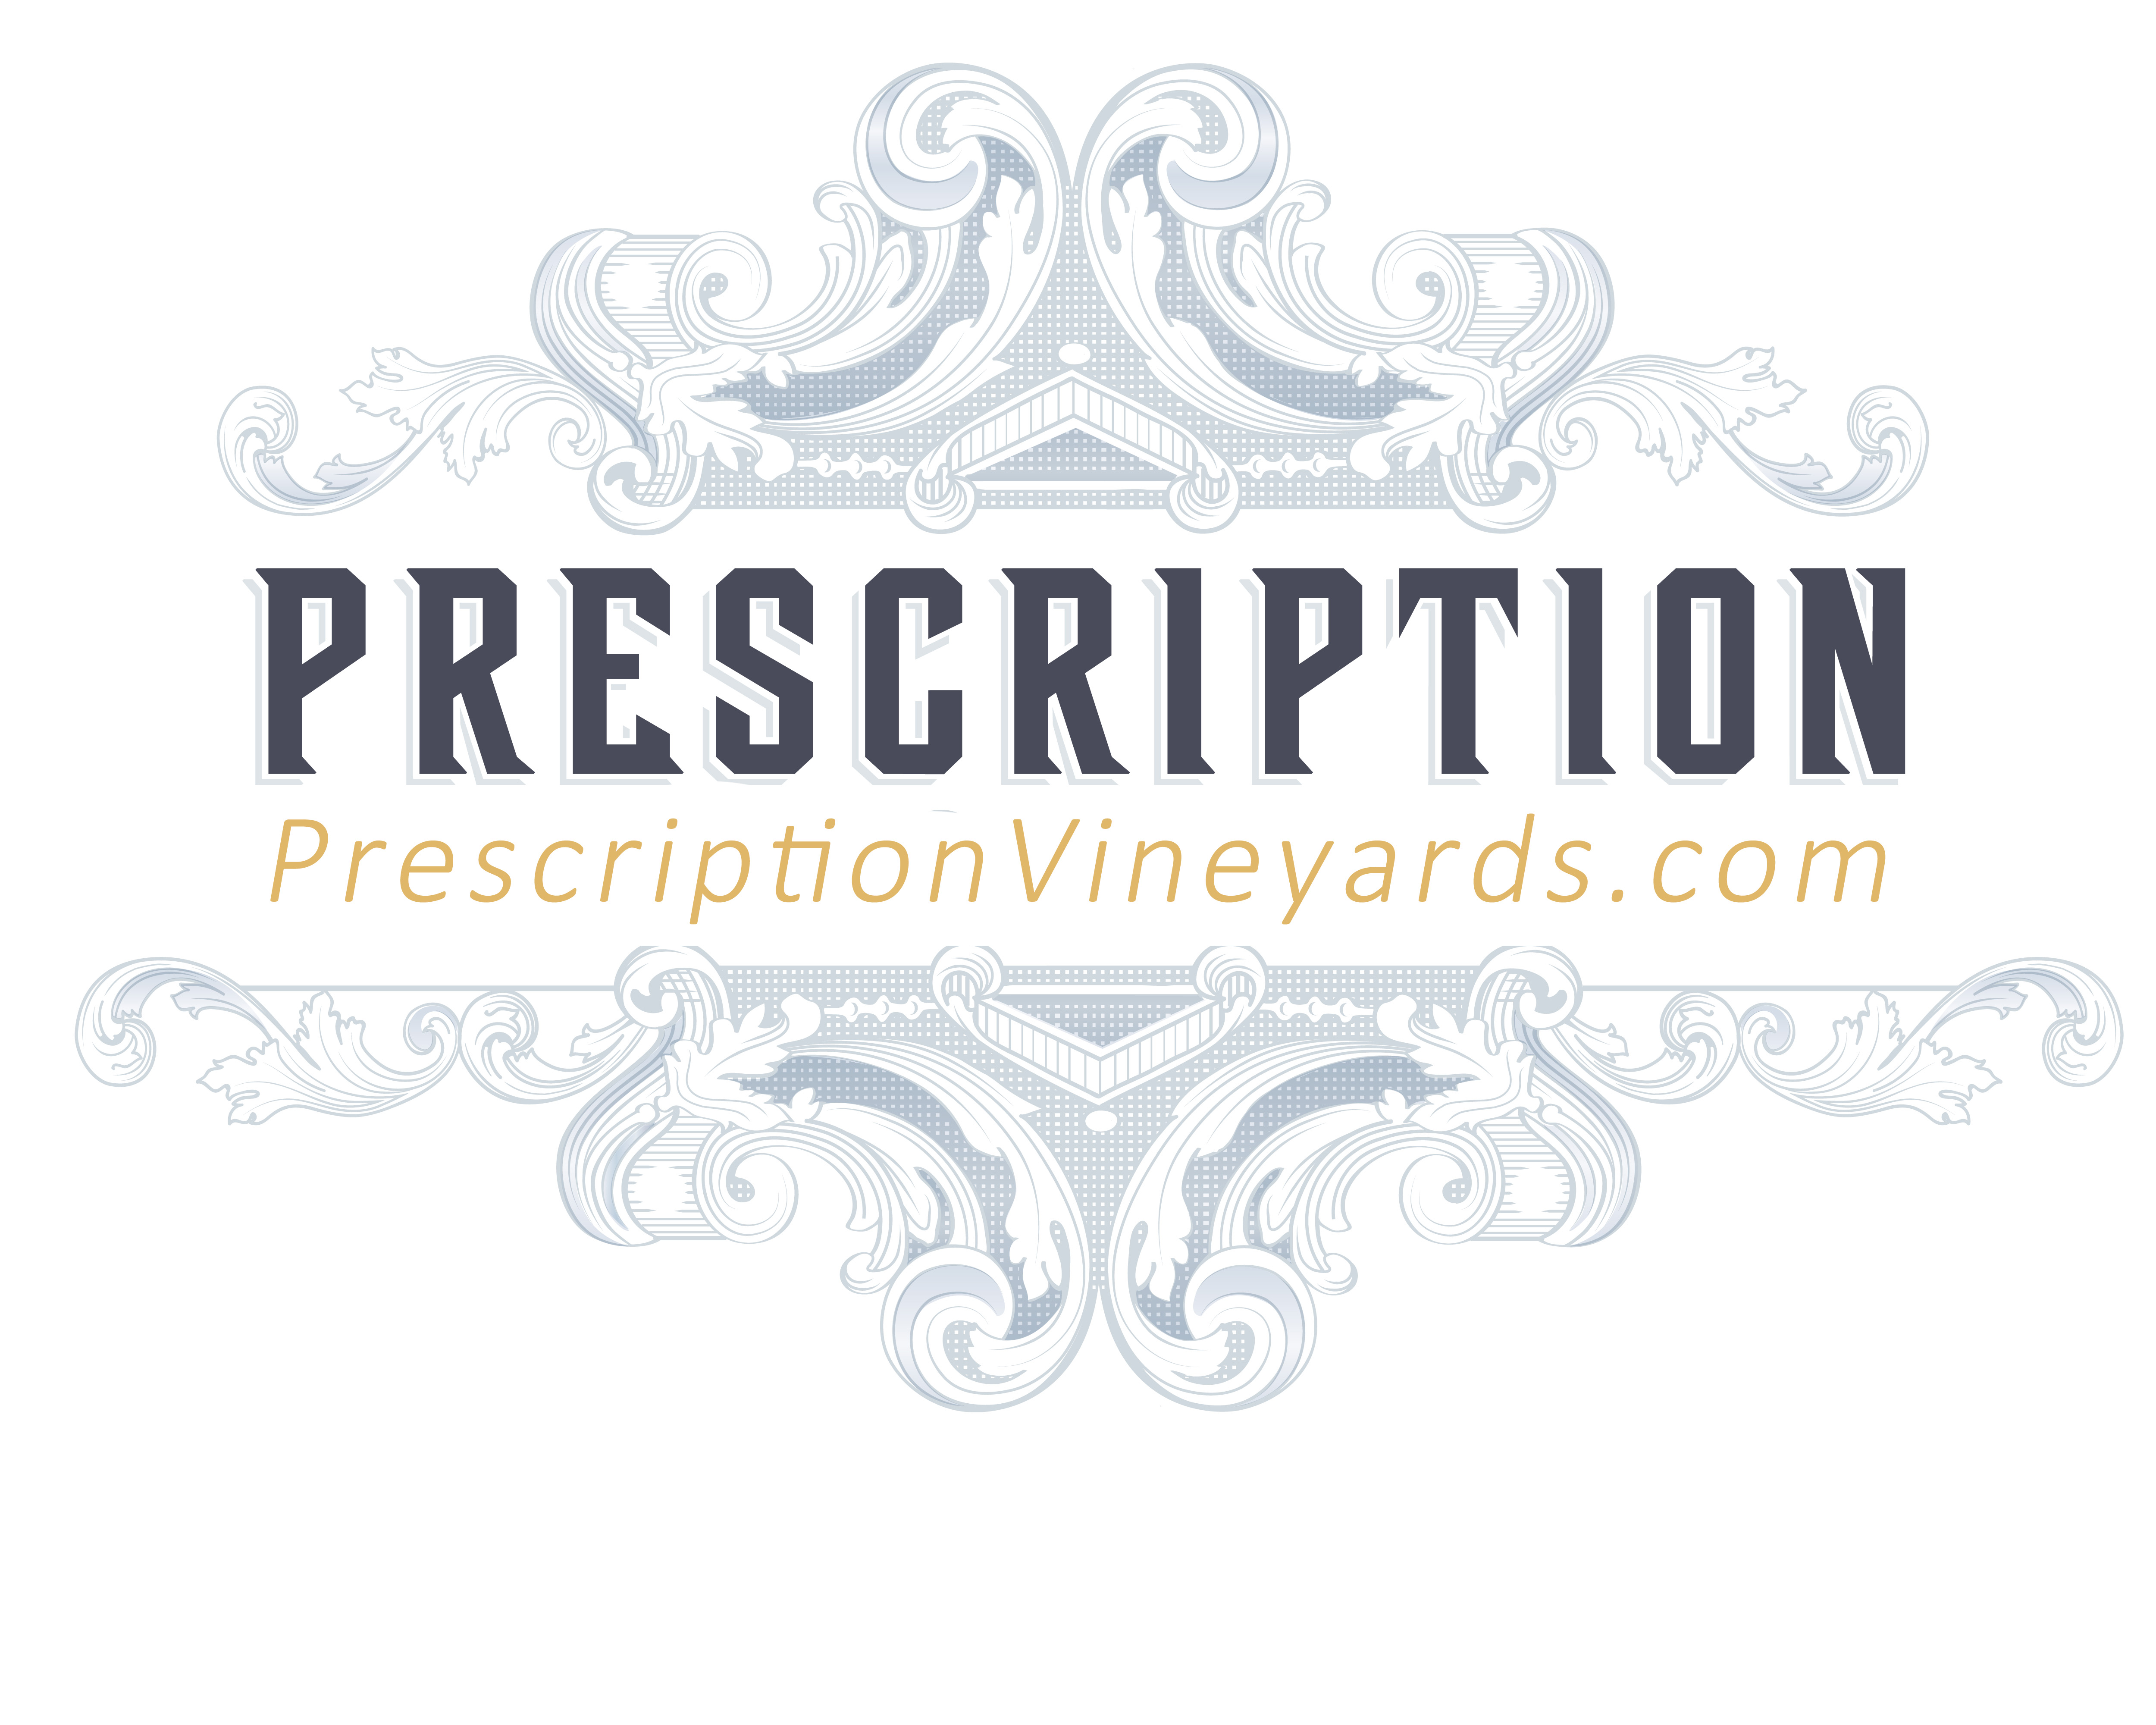 Prescription Vineyards